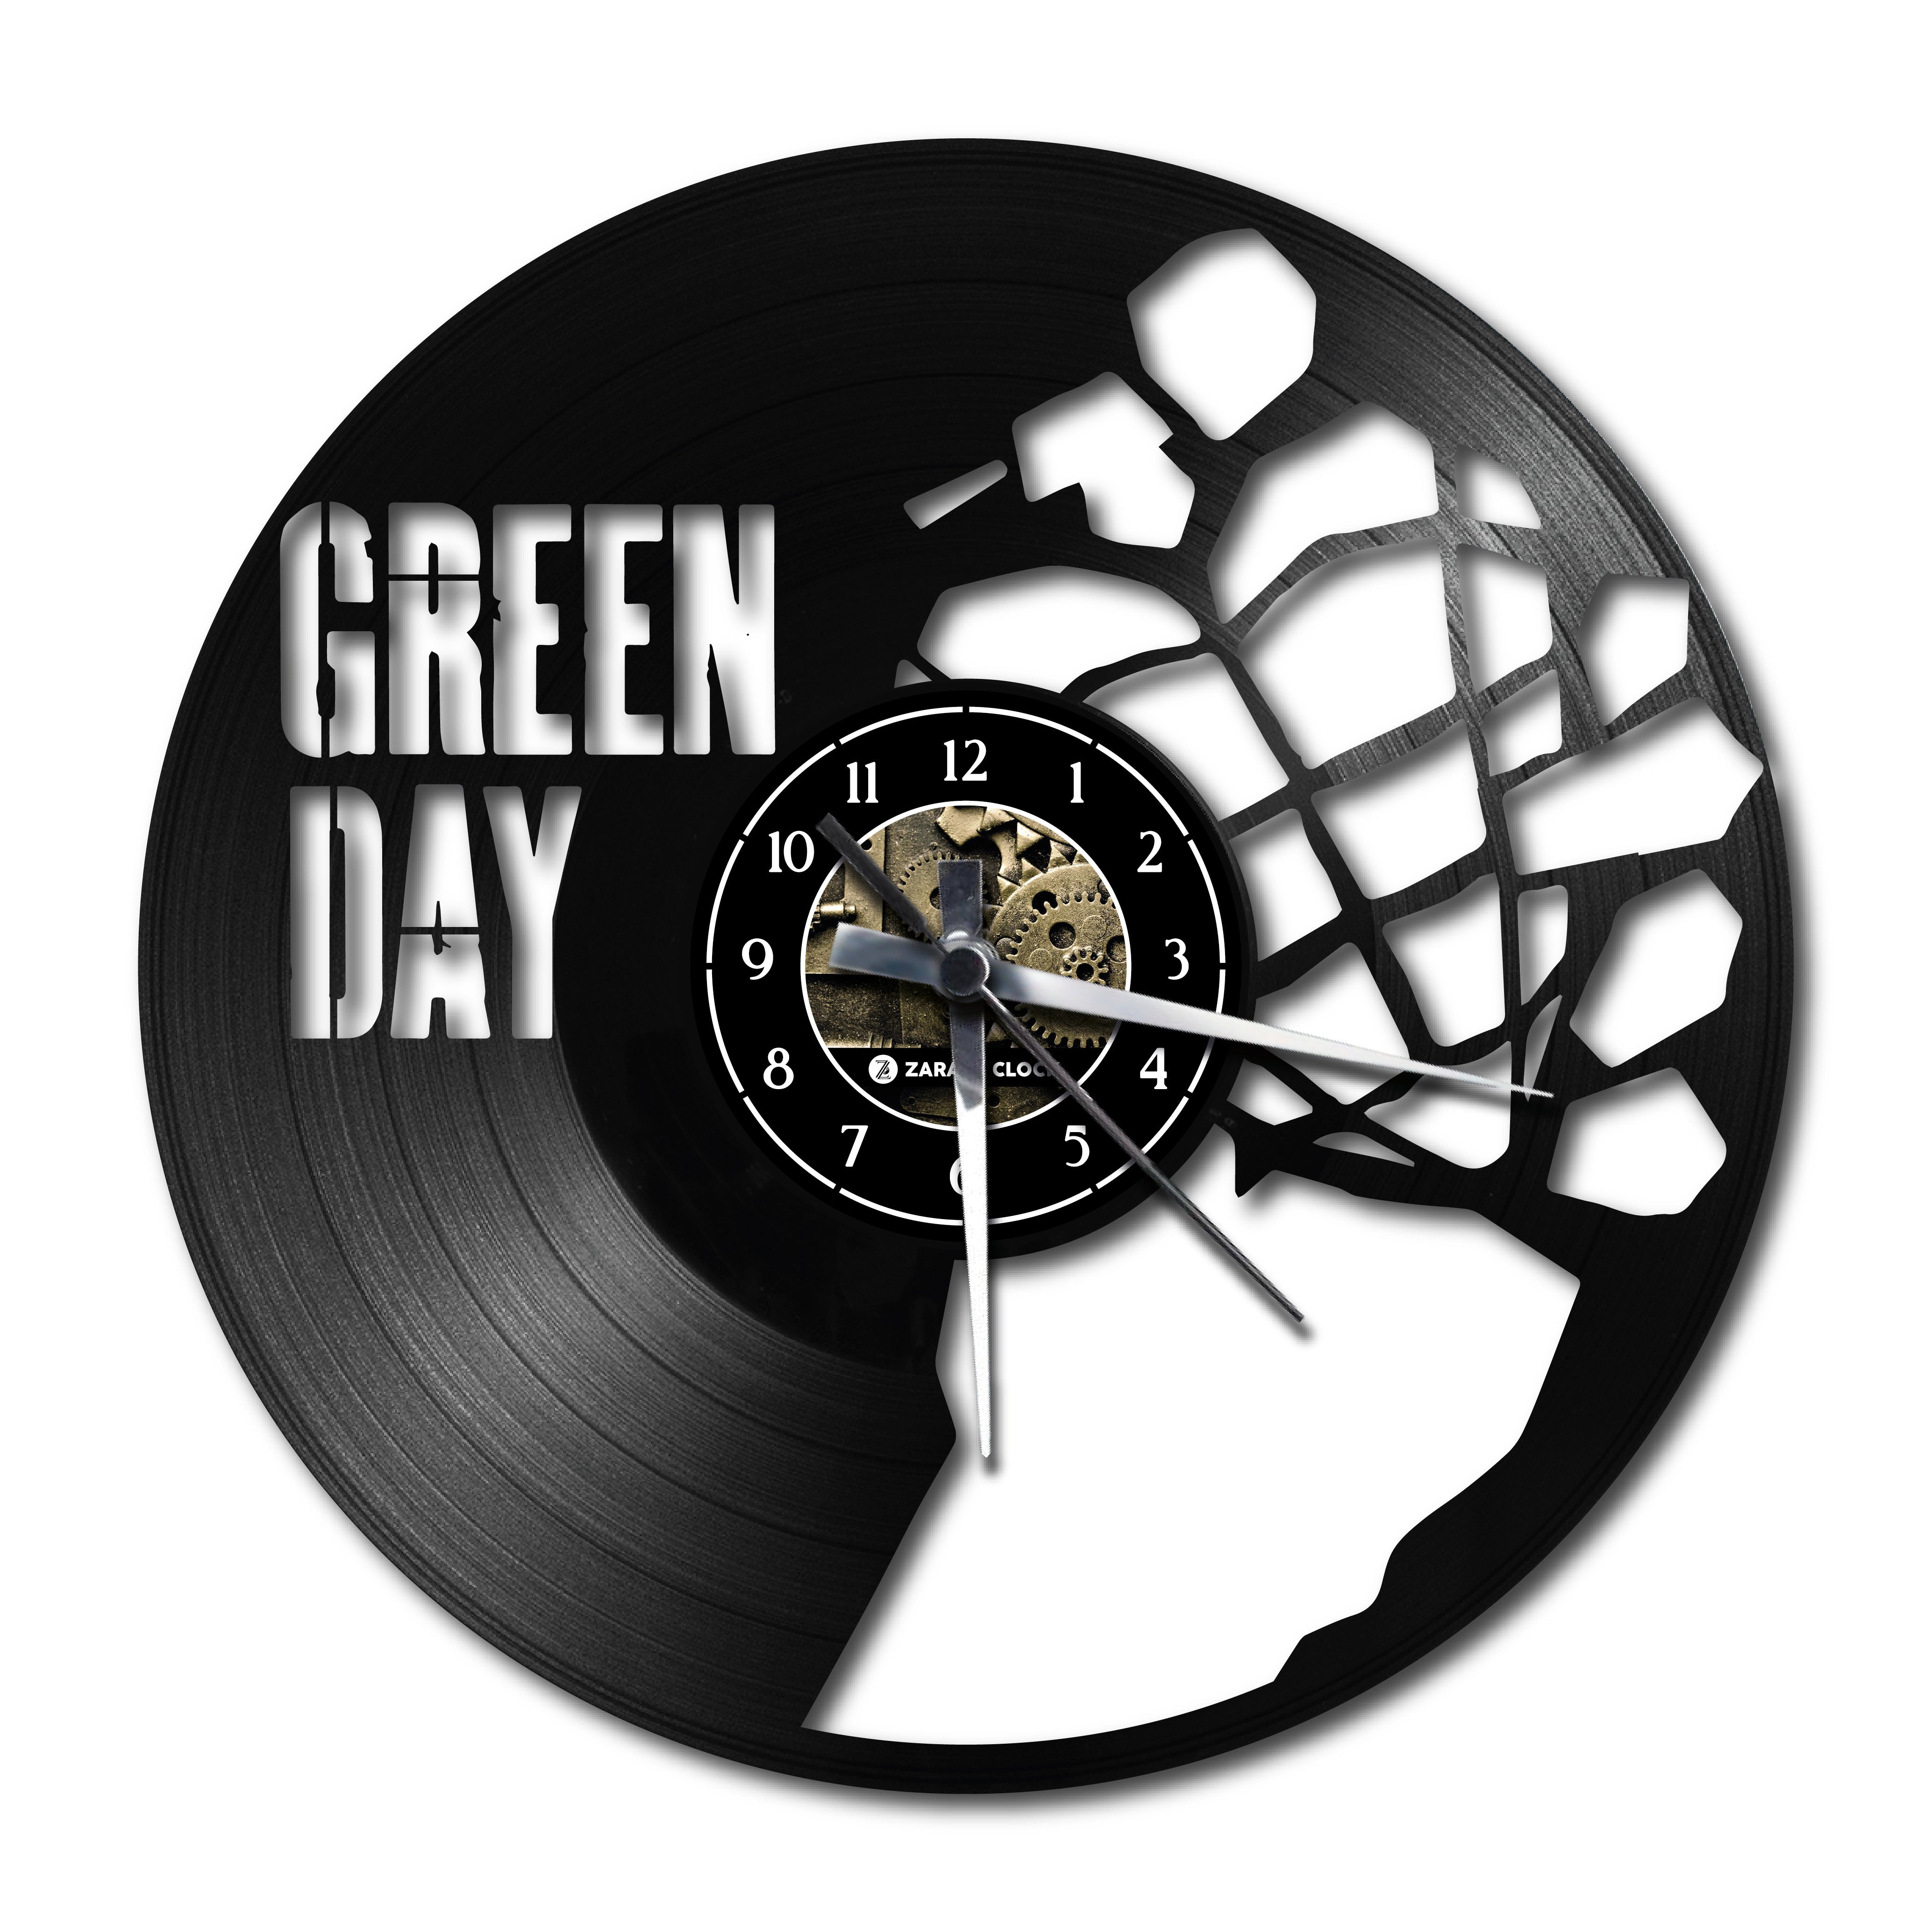 GREEN DAY vinyl record clock